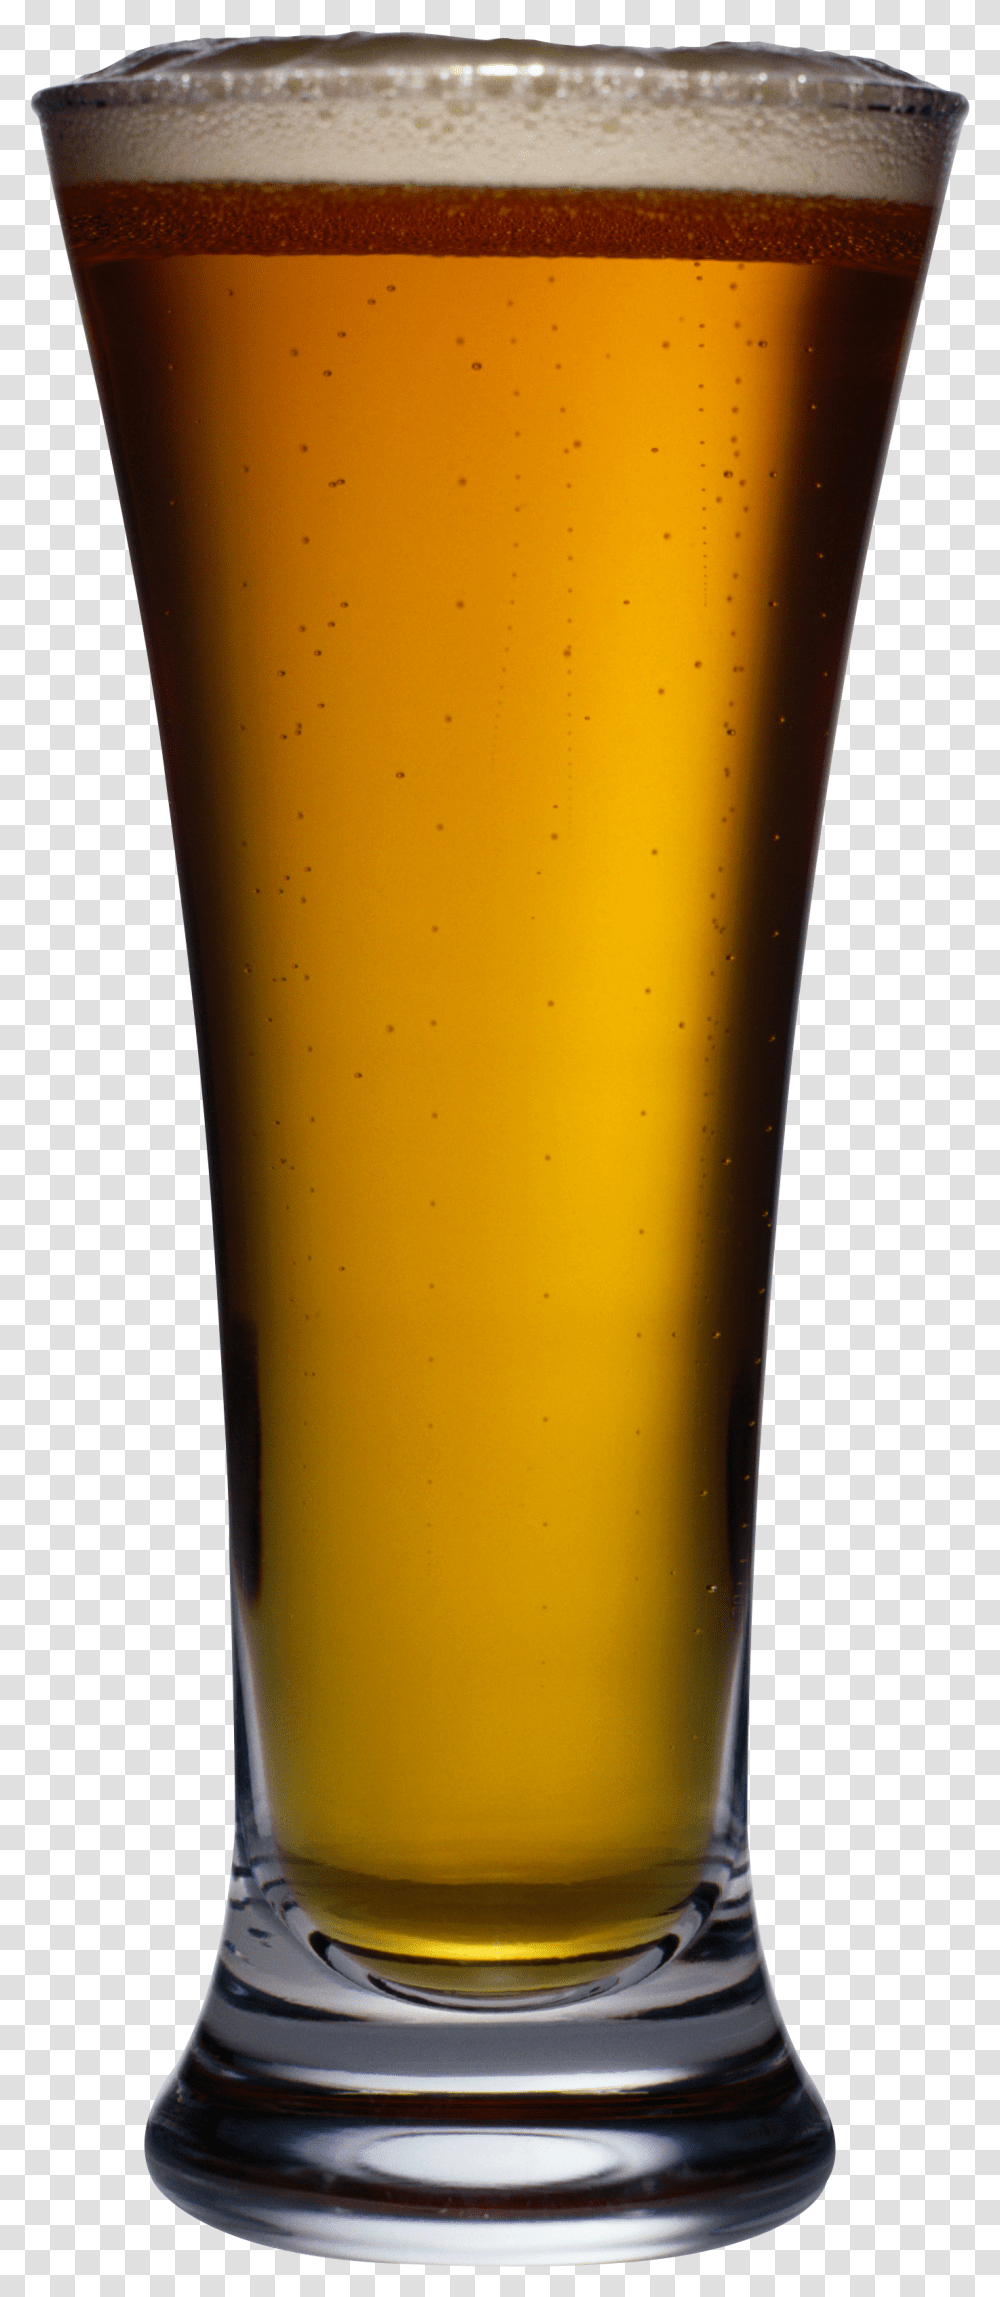 Download Beer In Mug Image For Free Beer Glass Transparent Png